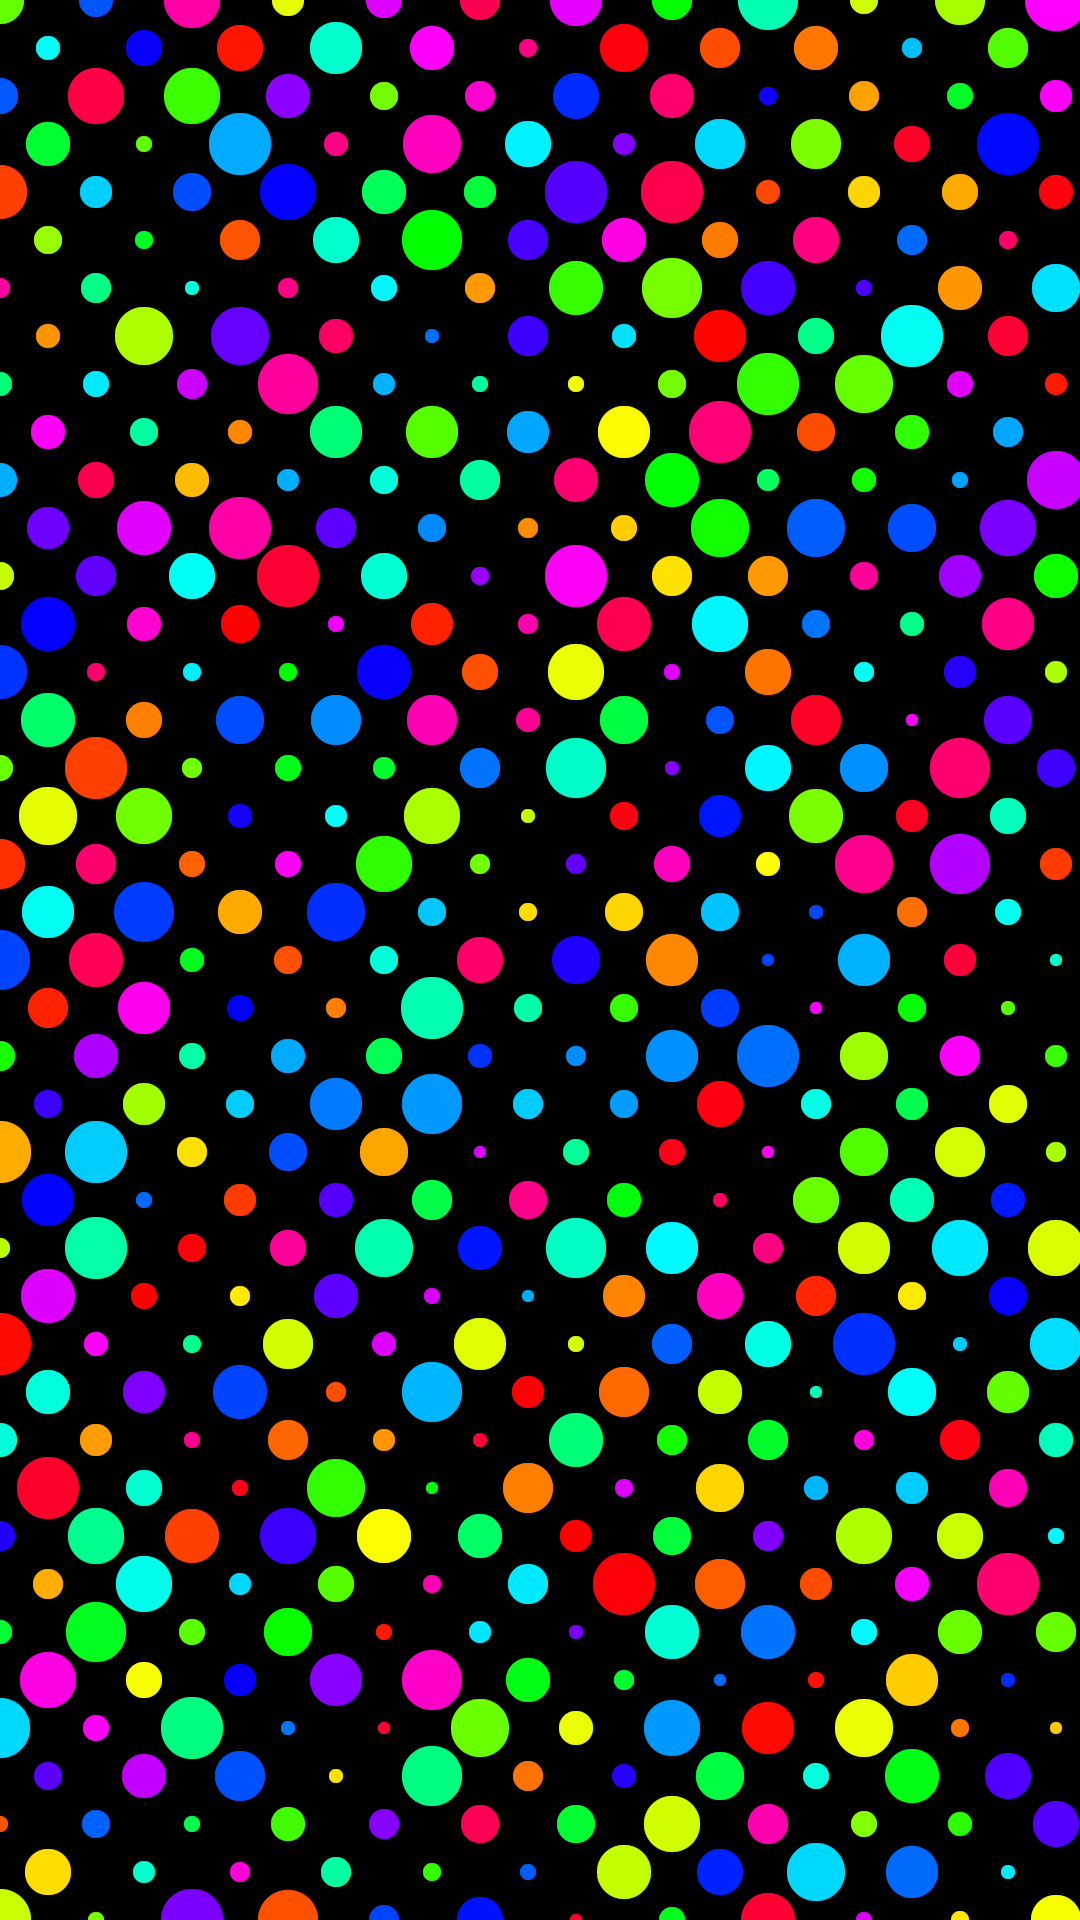 Colorful Polka Dot Wallpaper HD: iPhone, Android, Desktop